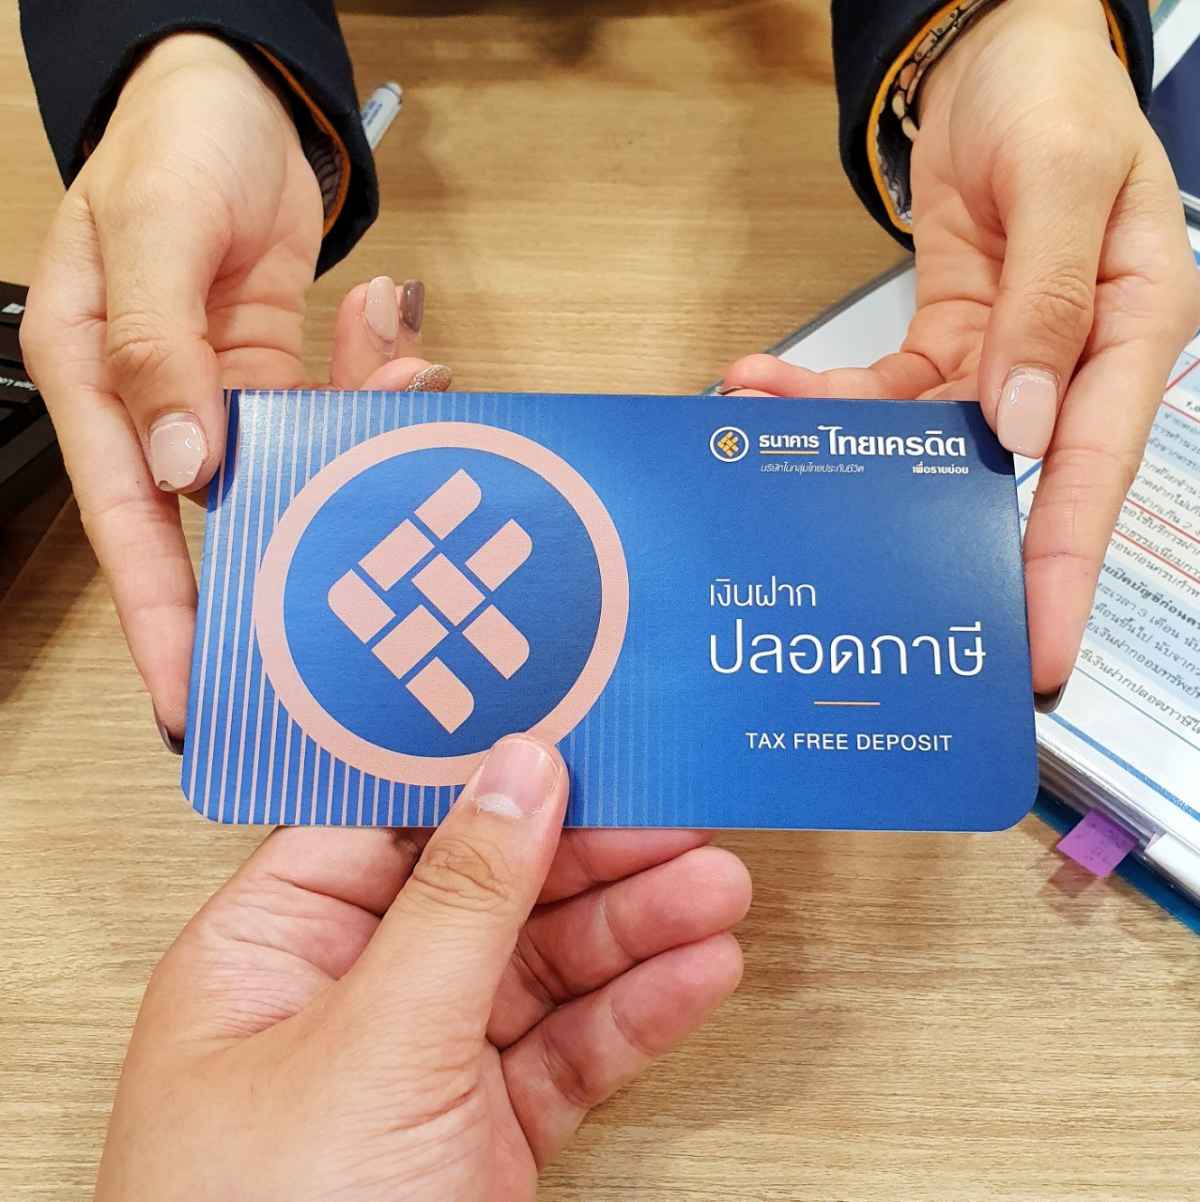 Thai Credit Ratail Bank